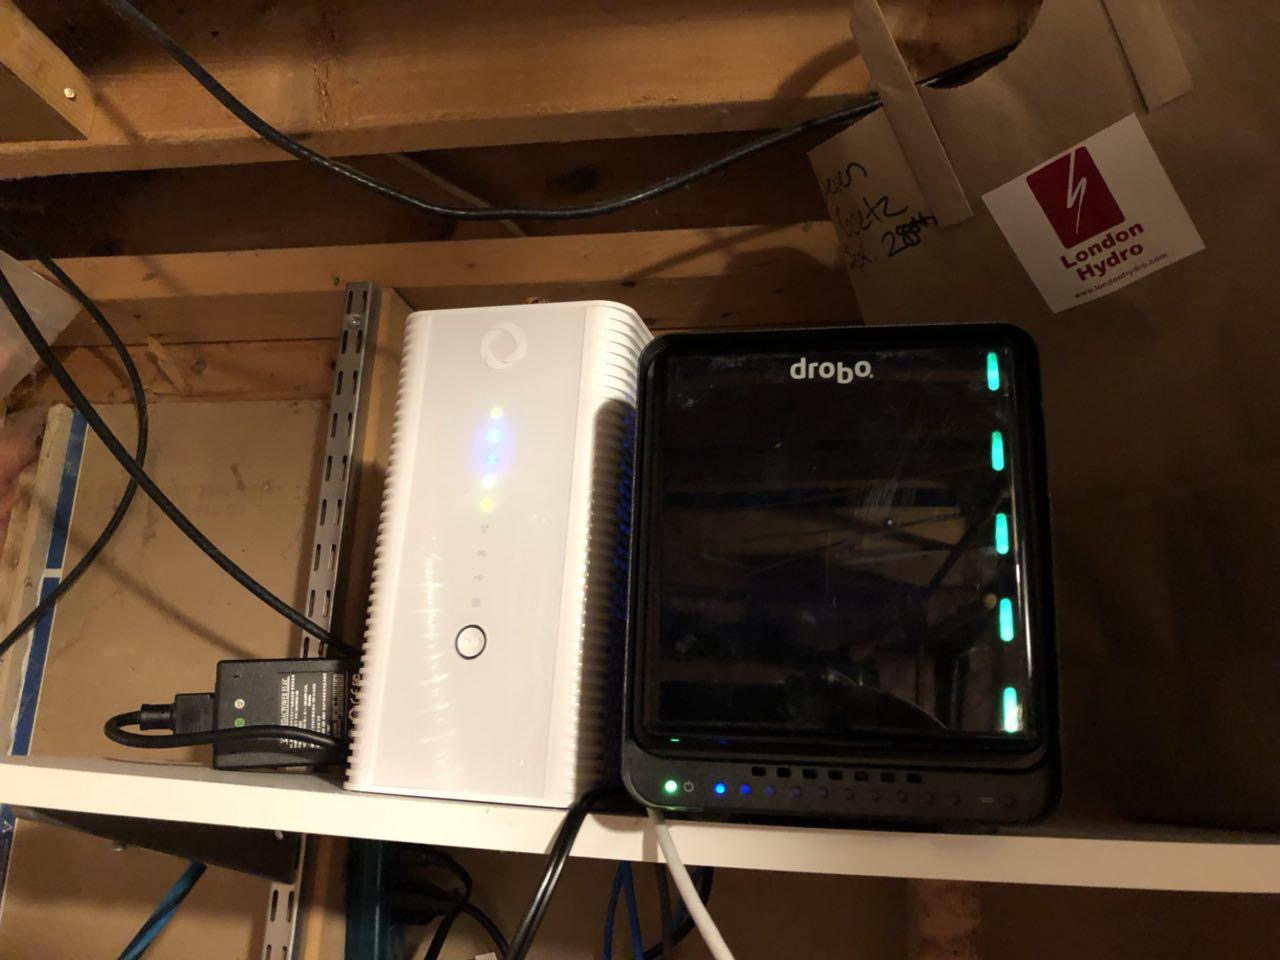 Drobo FS next to Stevens router